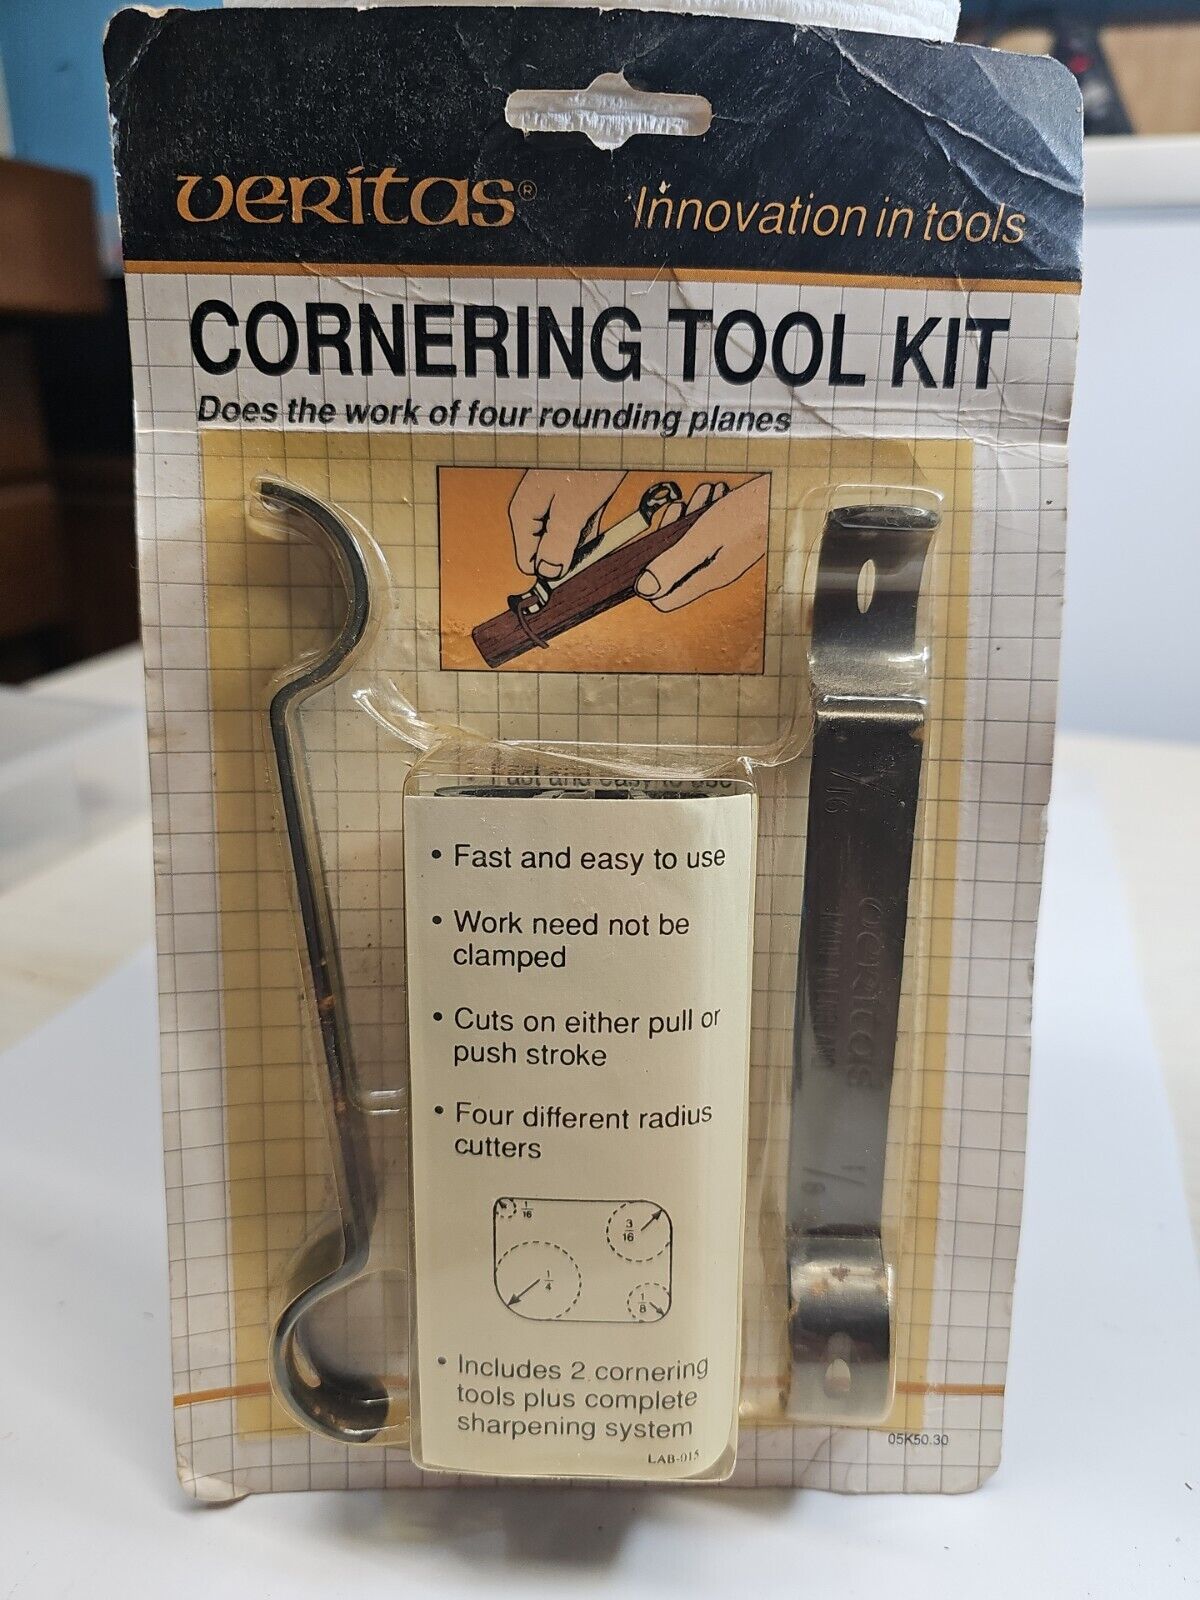 1990 NEW Veritas Cornering Tool Kit - 2pc Set 05K50.30 Woodworking Tool